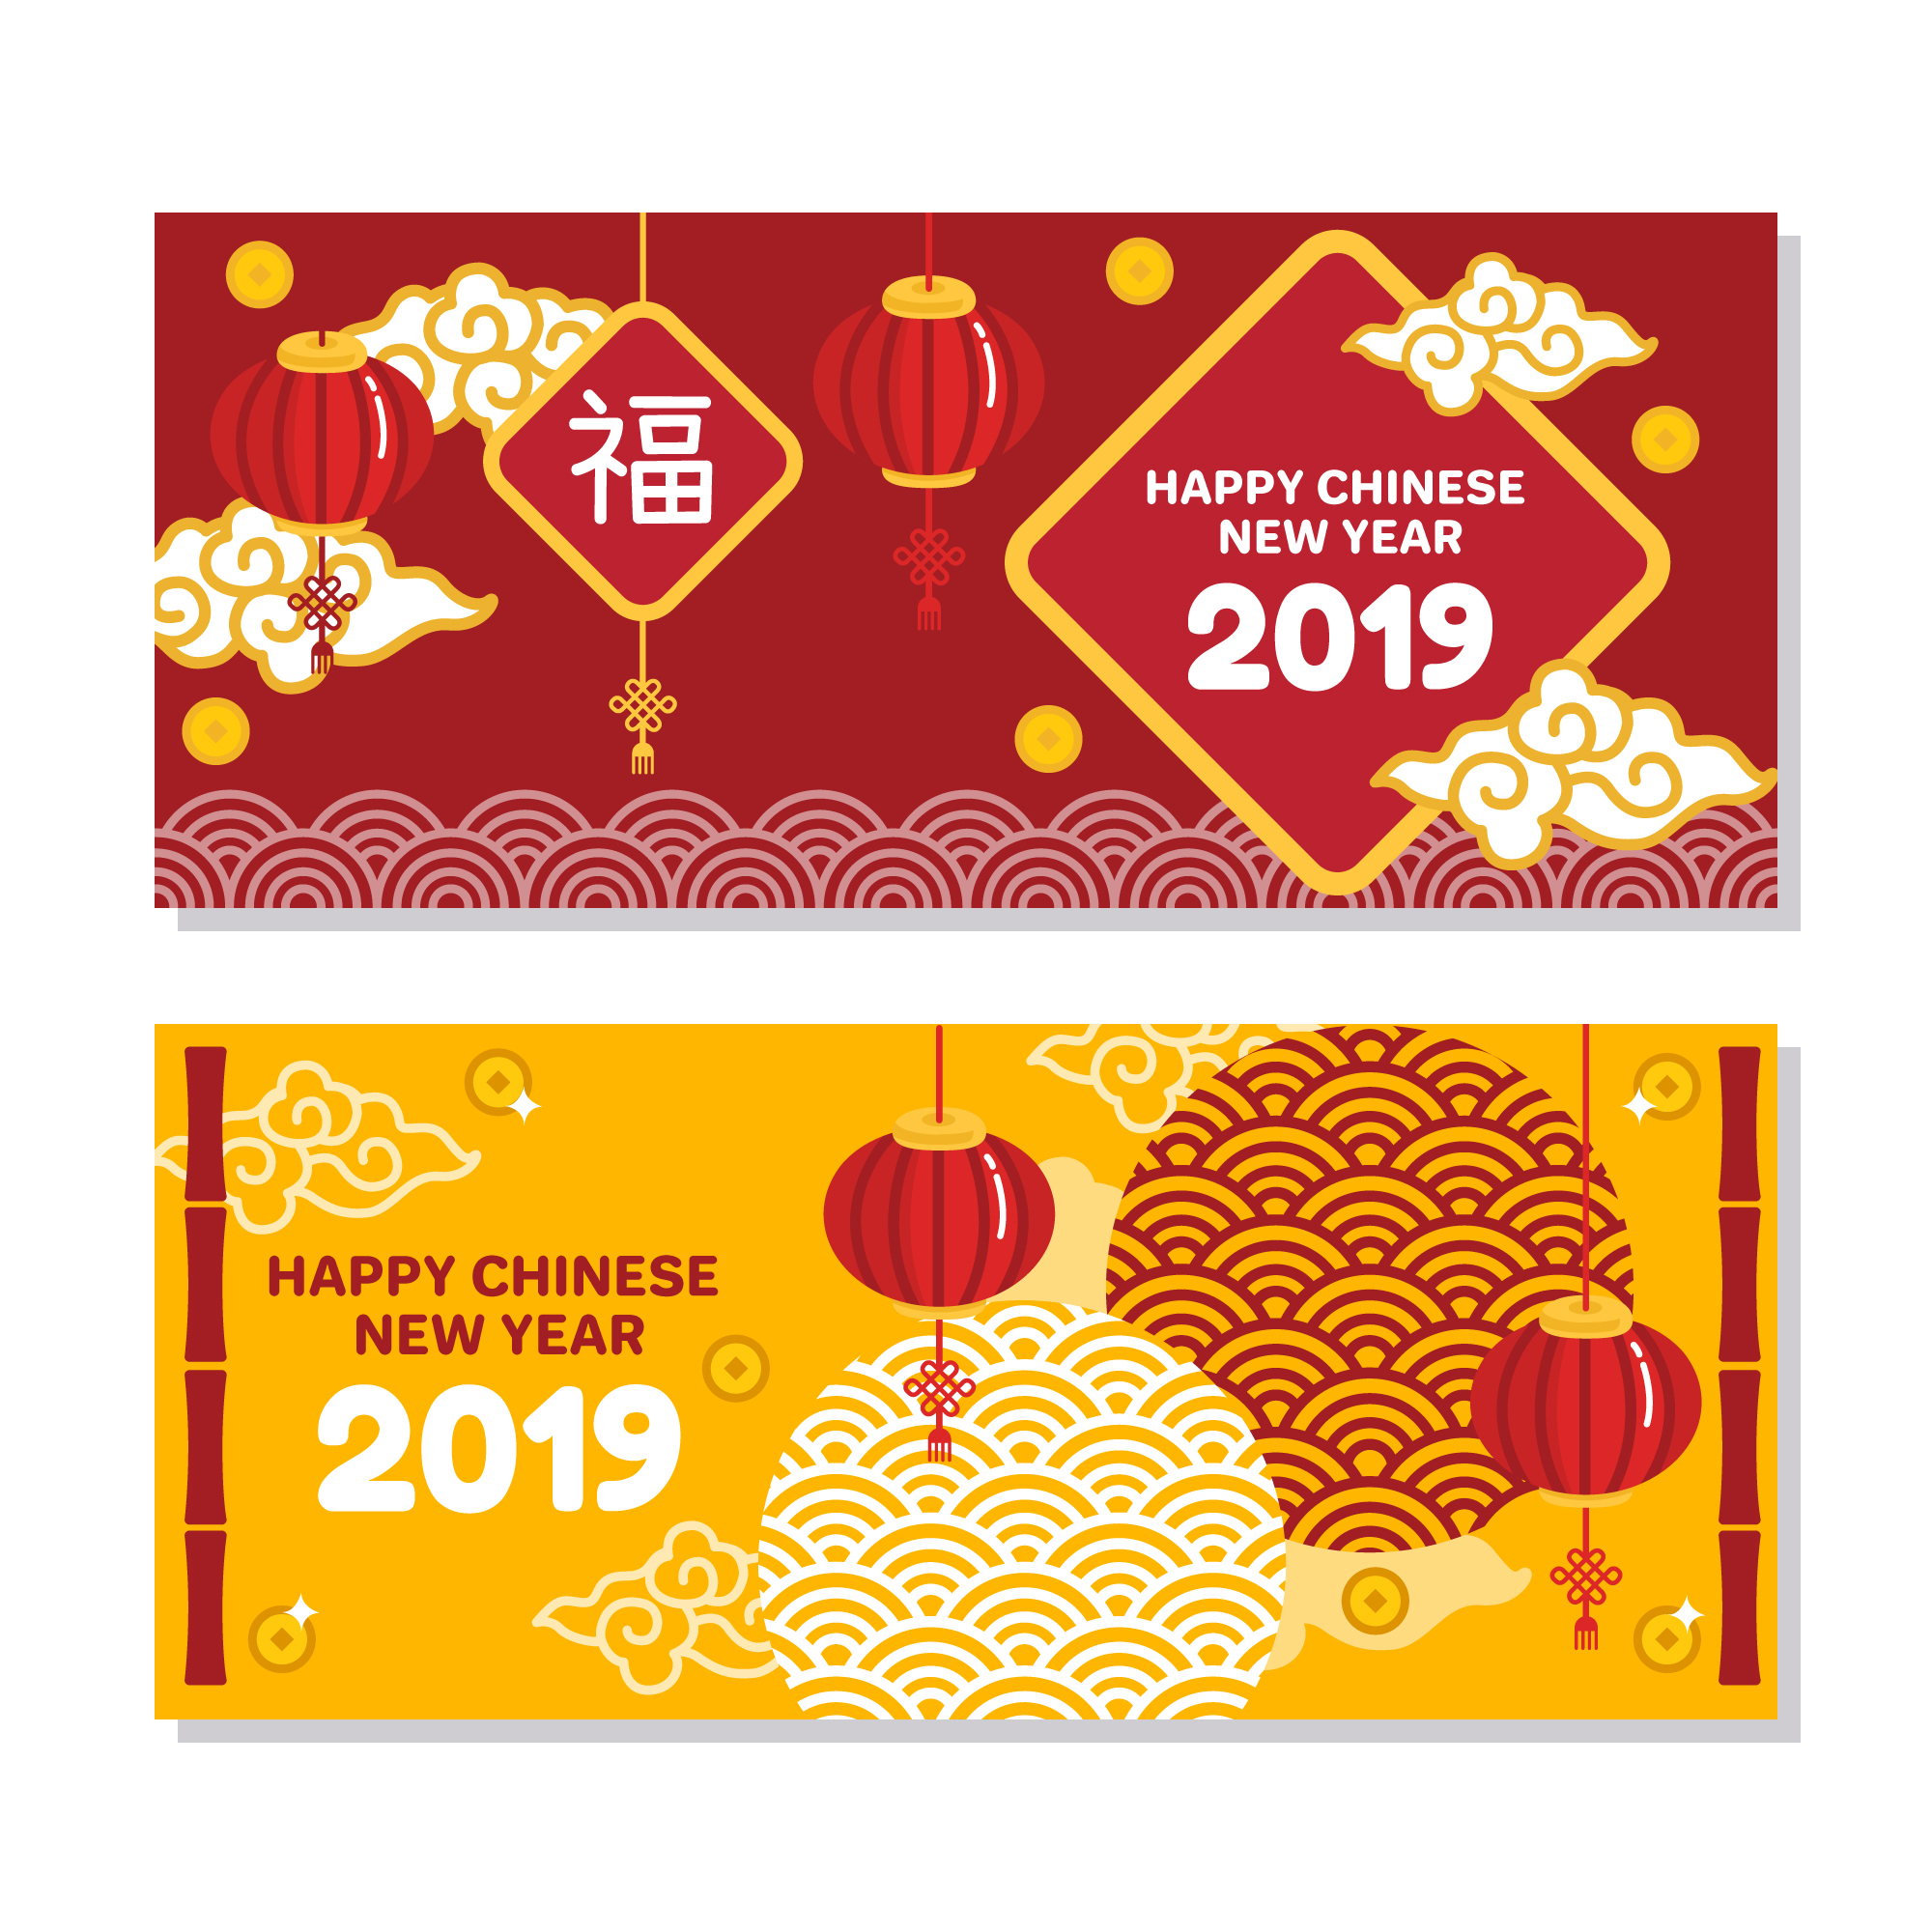 2019新年农历猪年贺卡矢量素材模板 2019 New Year Lunar Year Of The Pig Greeting Card Vector Material Template插图3